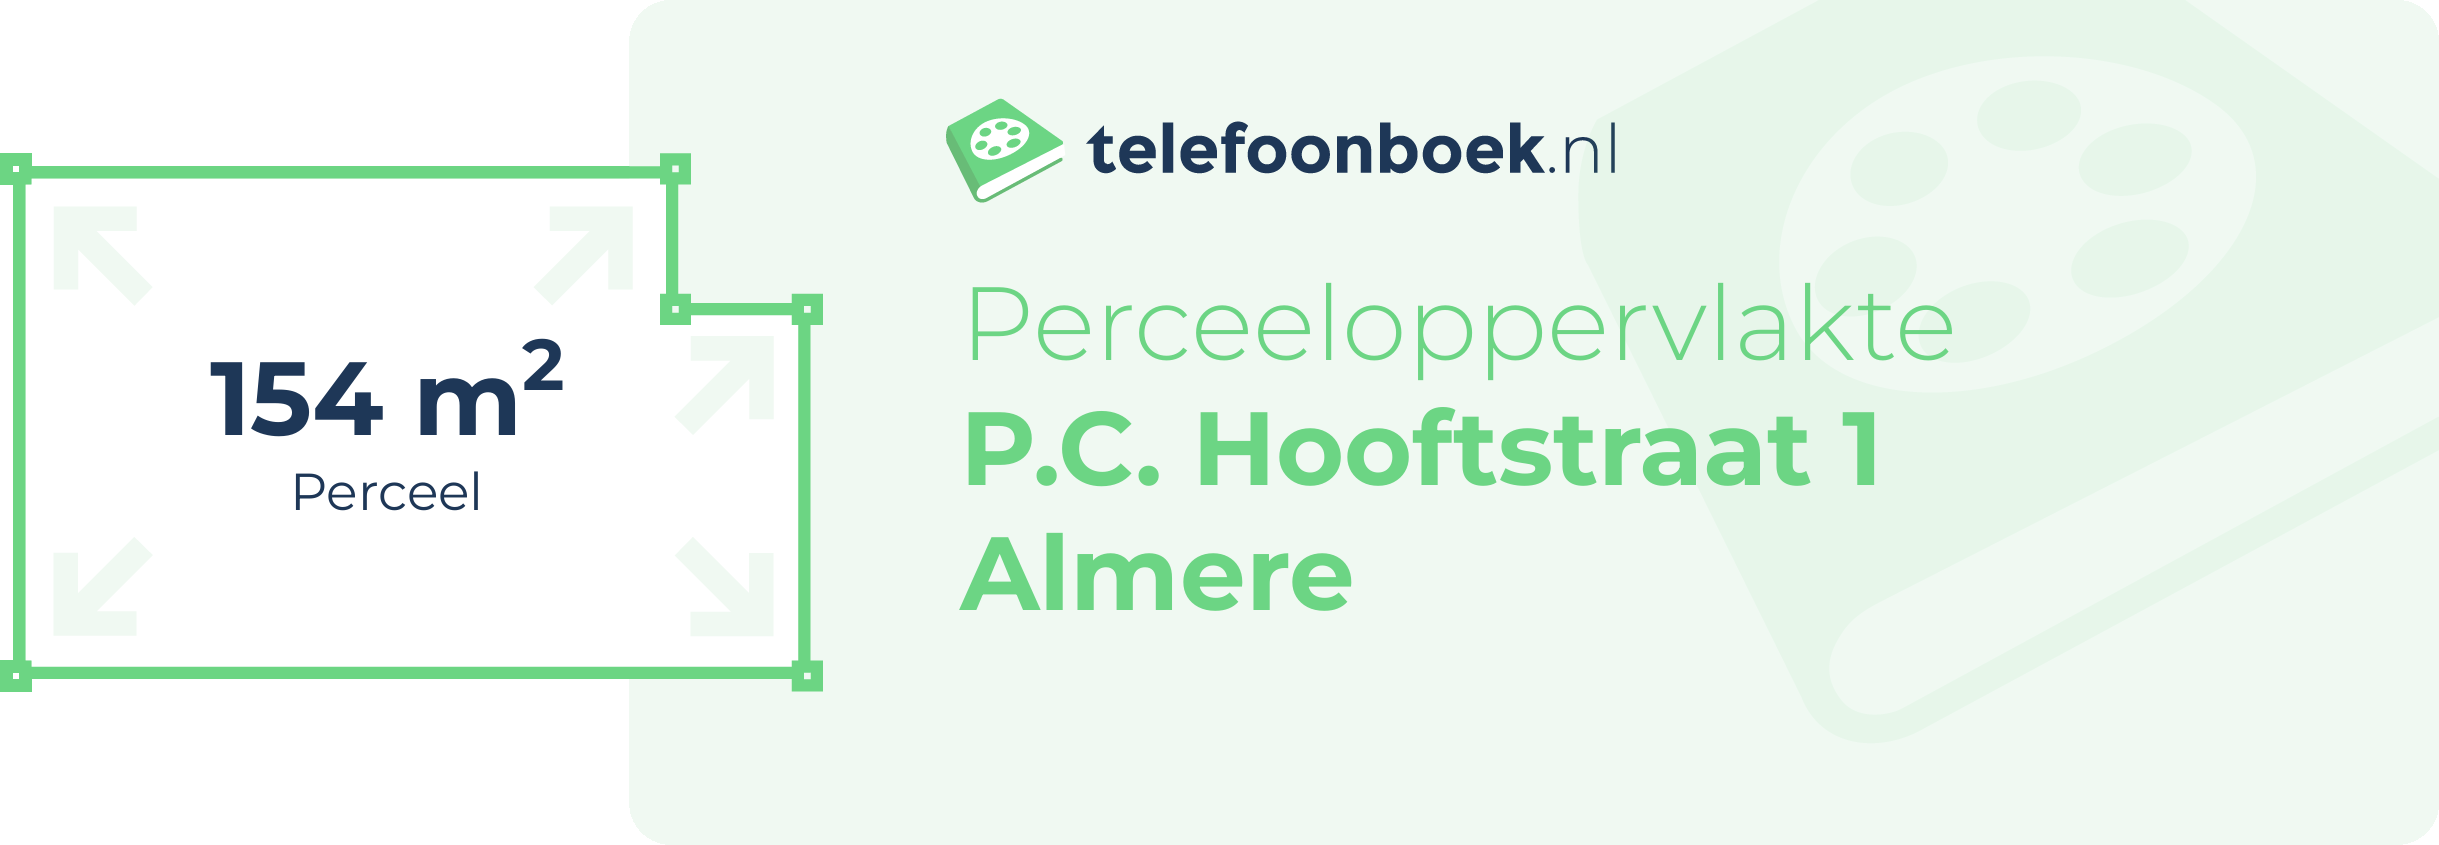 Perceeloppervlakte P.C. Hooftstraat 1 Almere